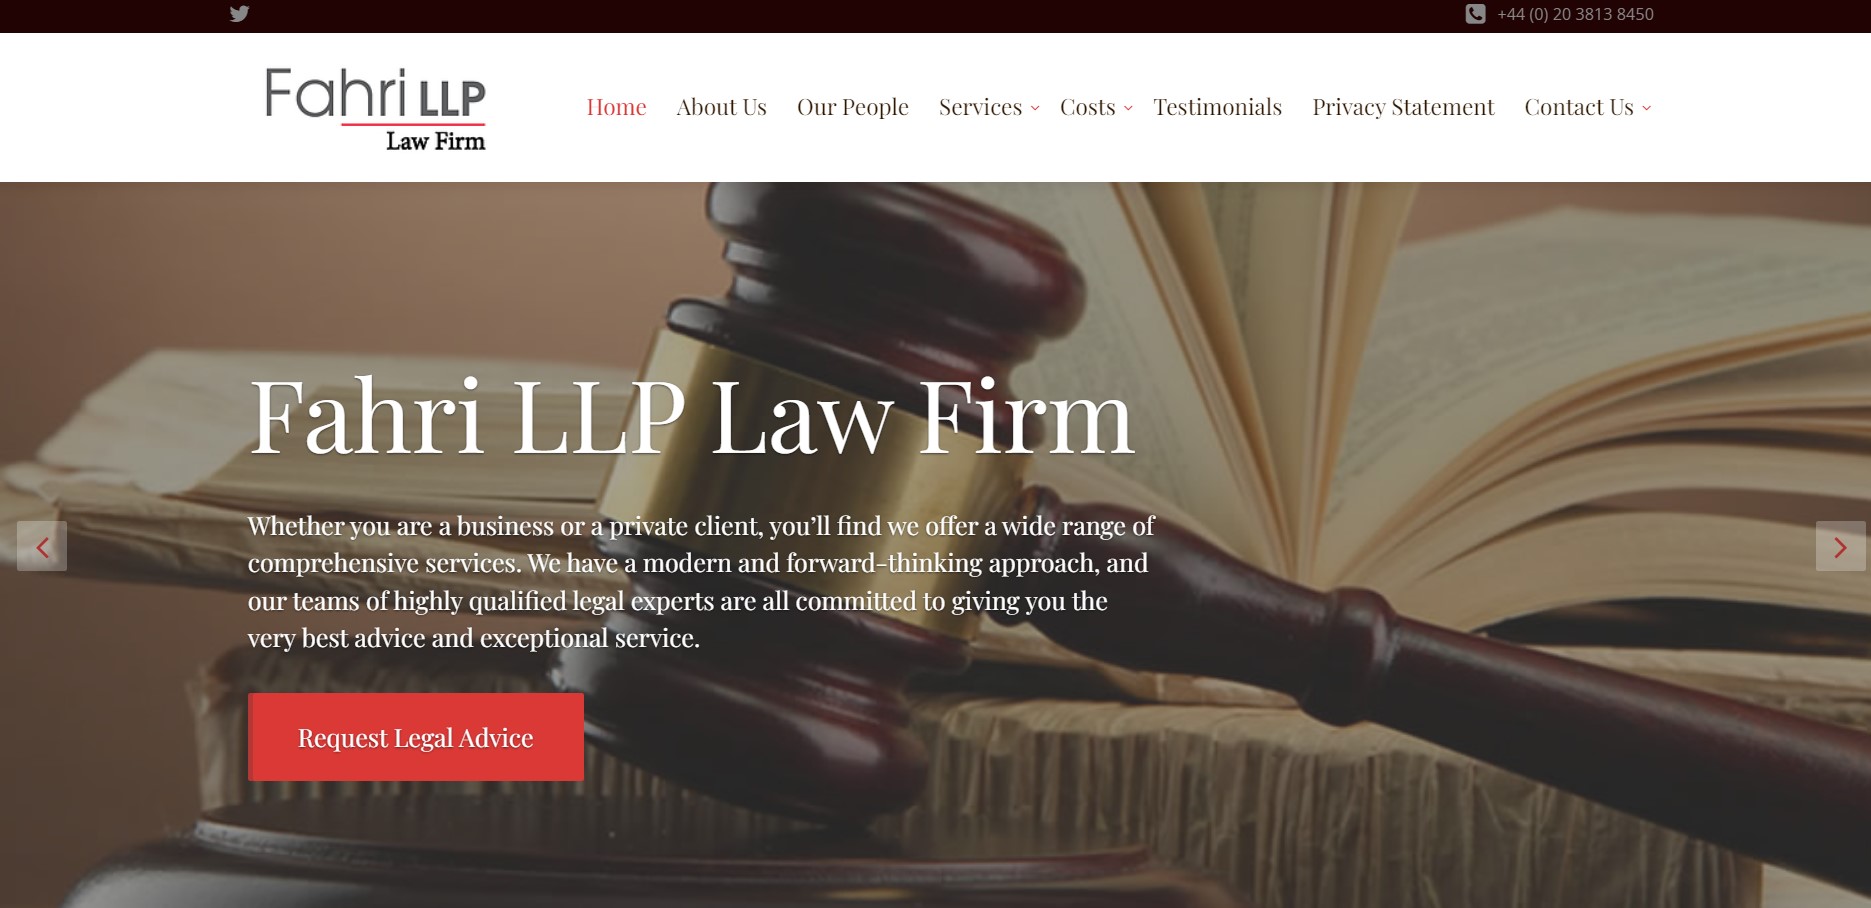 Fahri LLP Law Firm